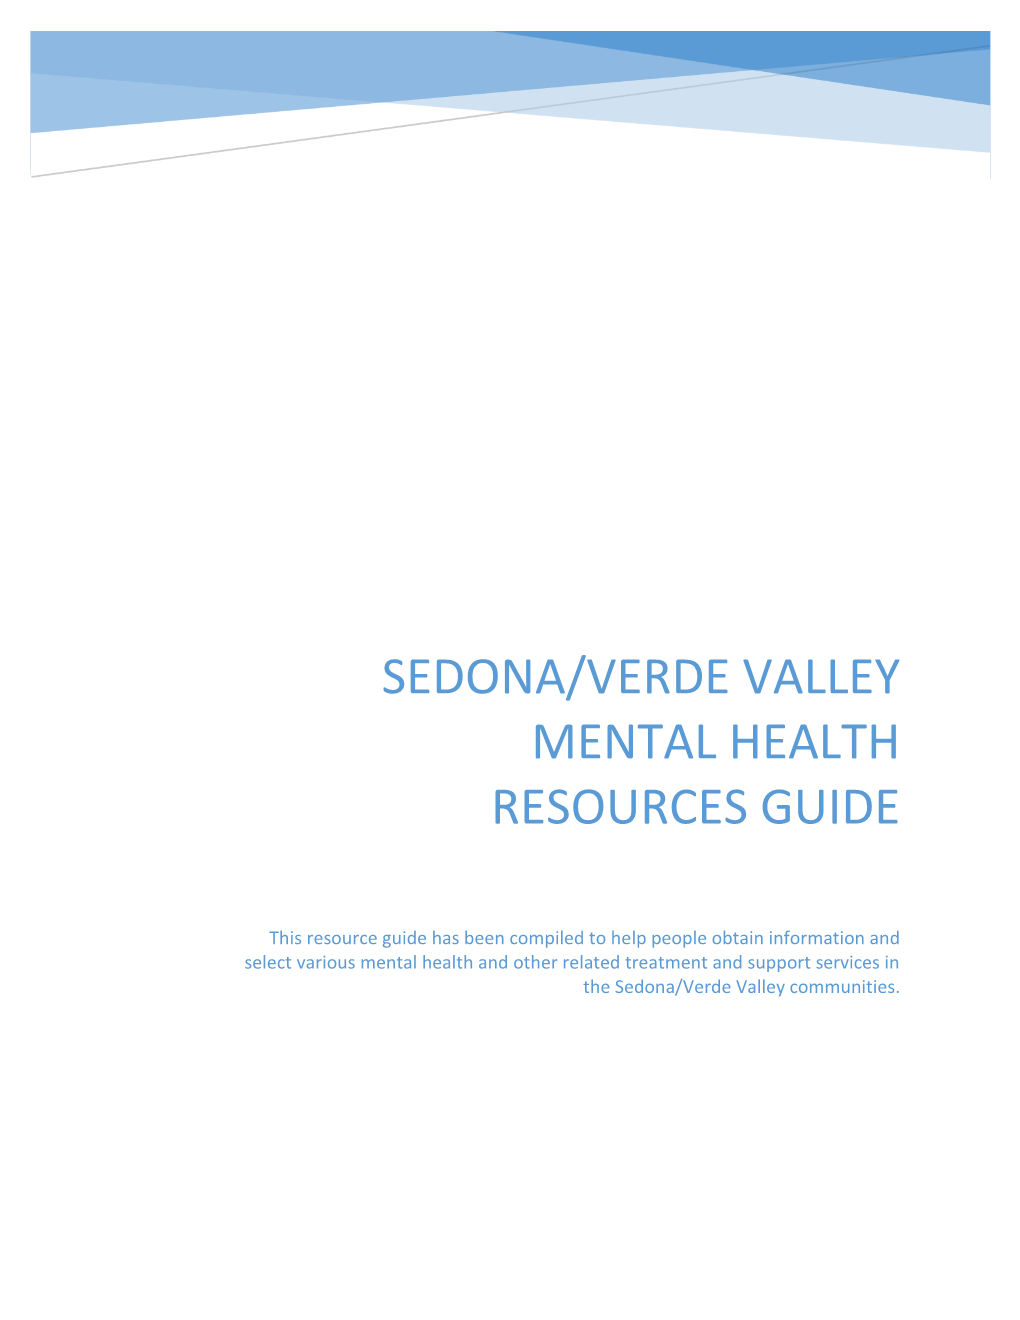 Sedona/Verde Valley Mental Health Resources Guide